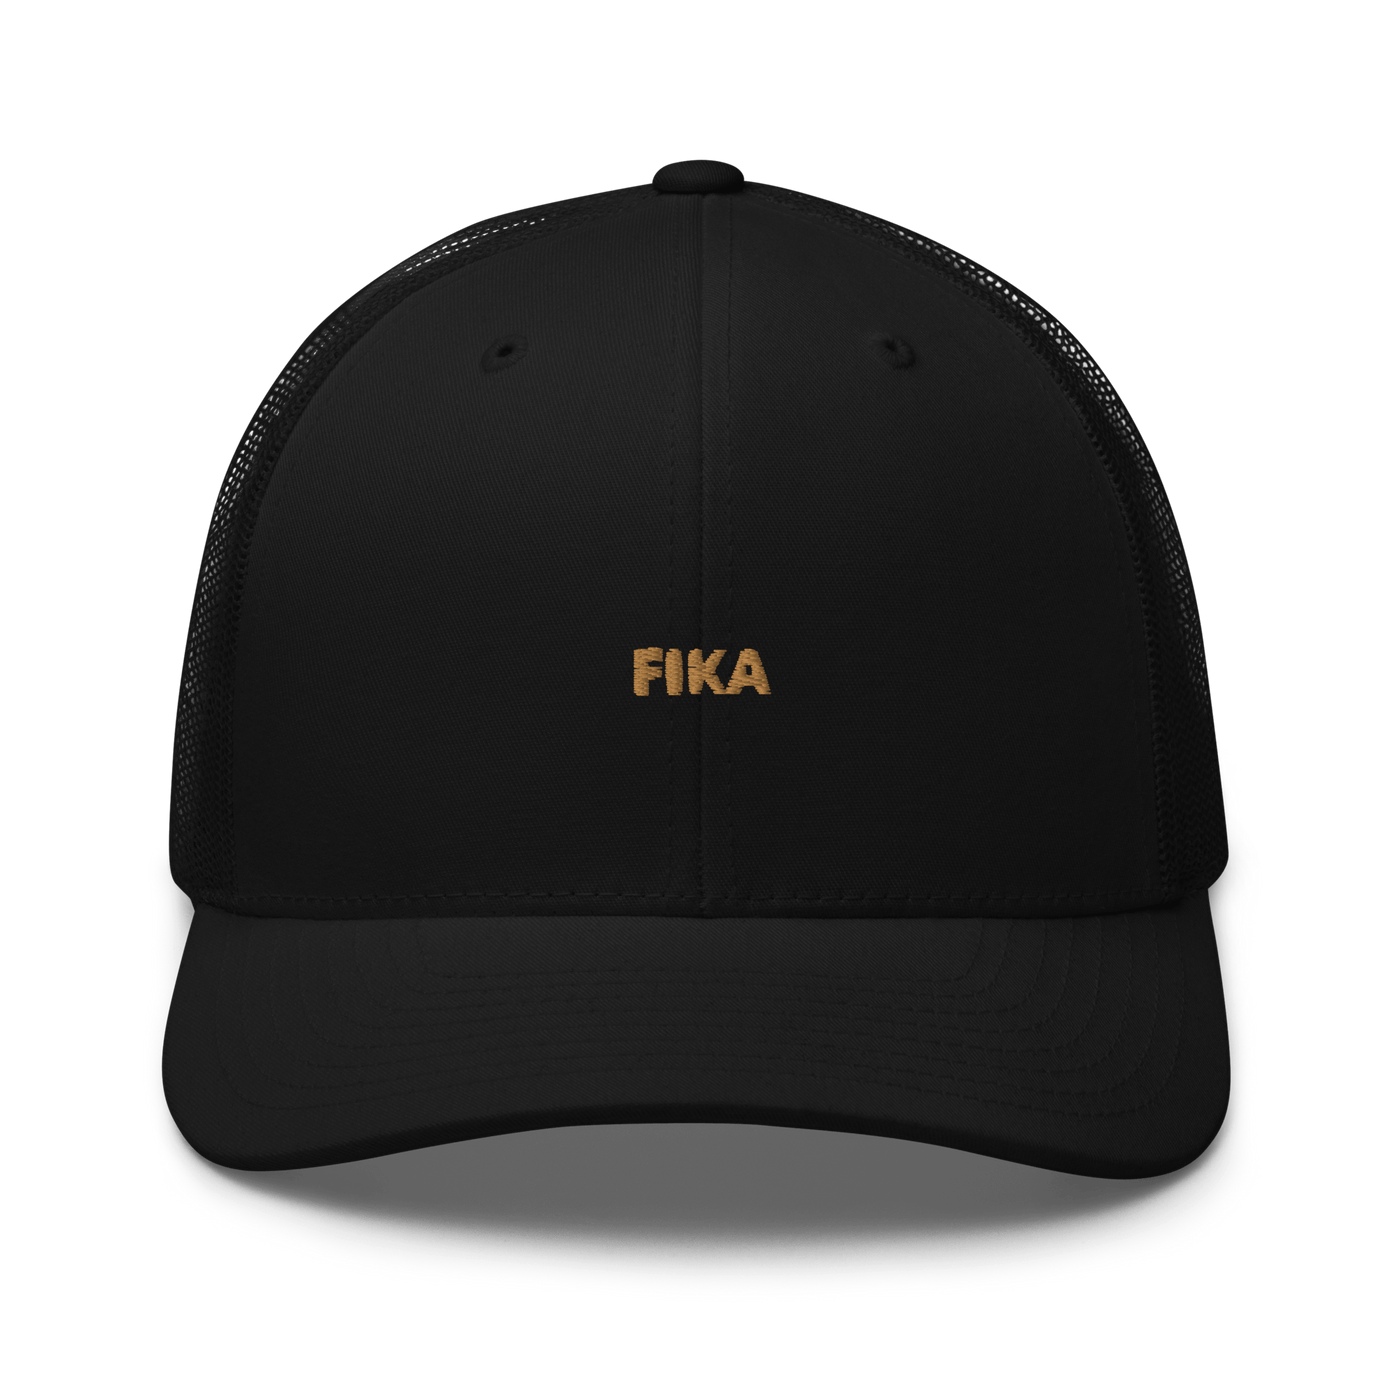 FIKA Trucker Cap - White - - Just Another Cap Store